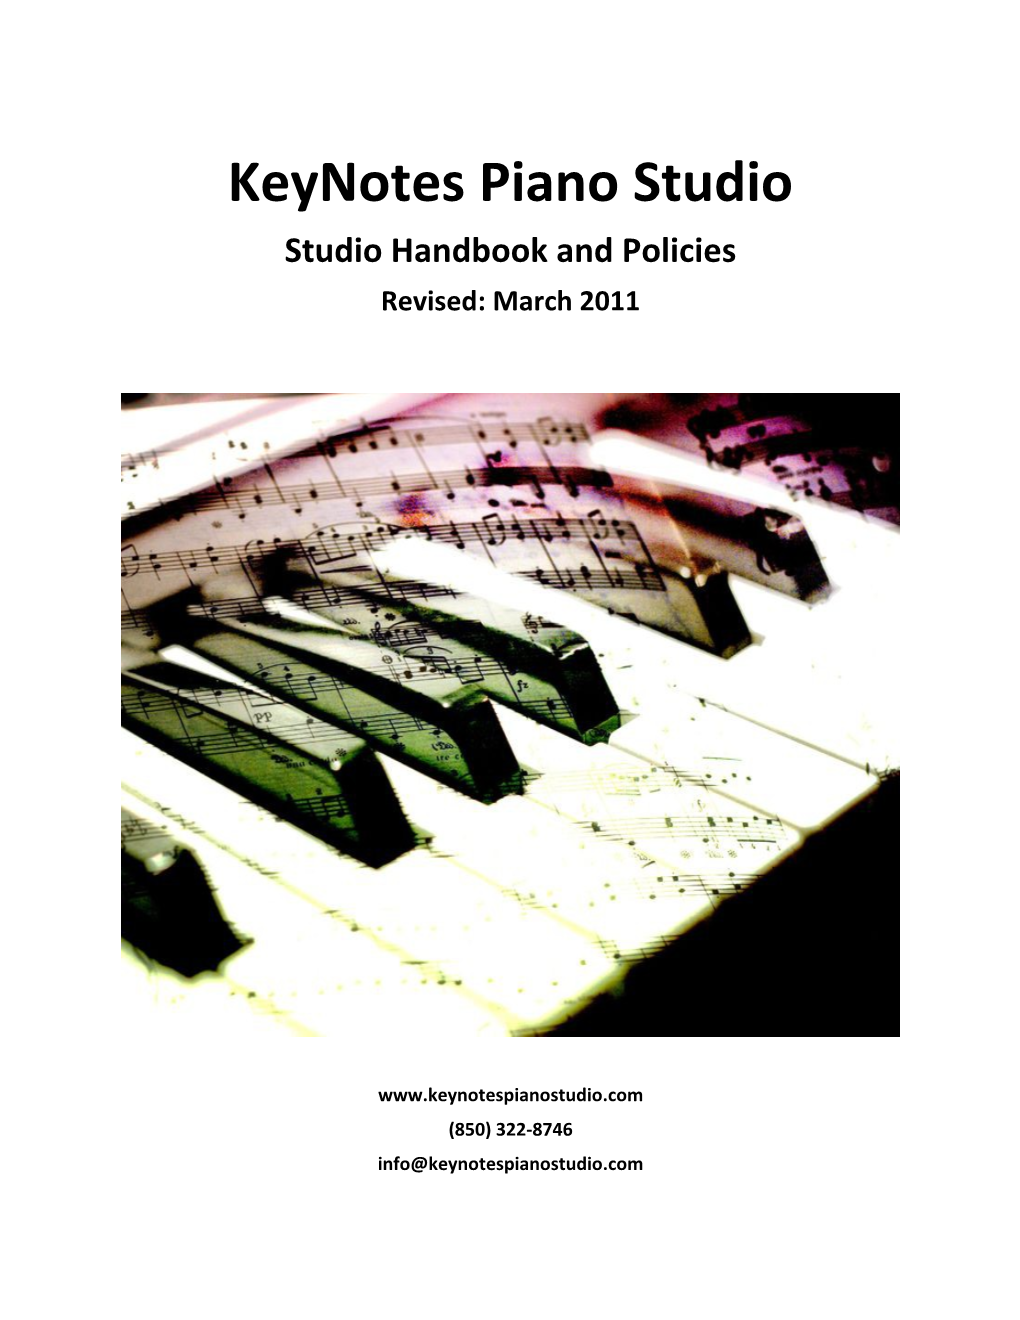 Keynotes Piano Studio